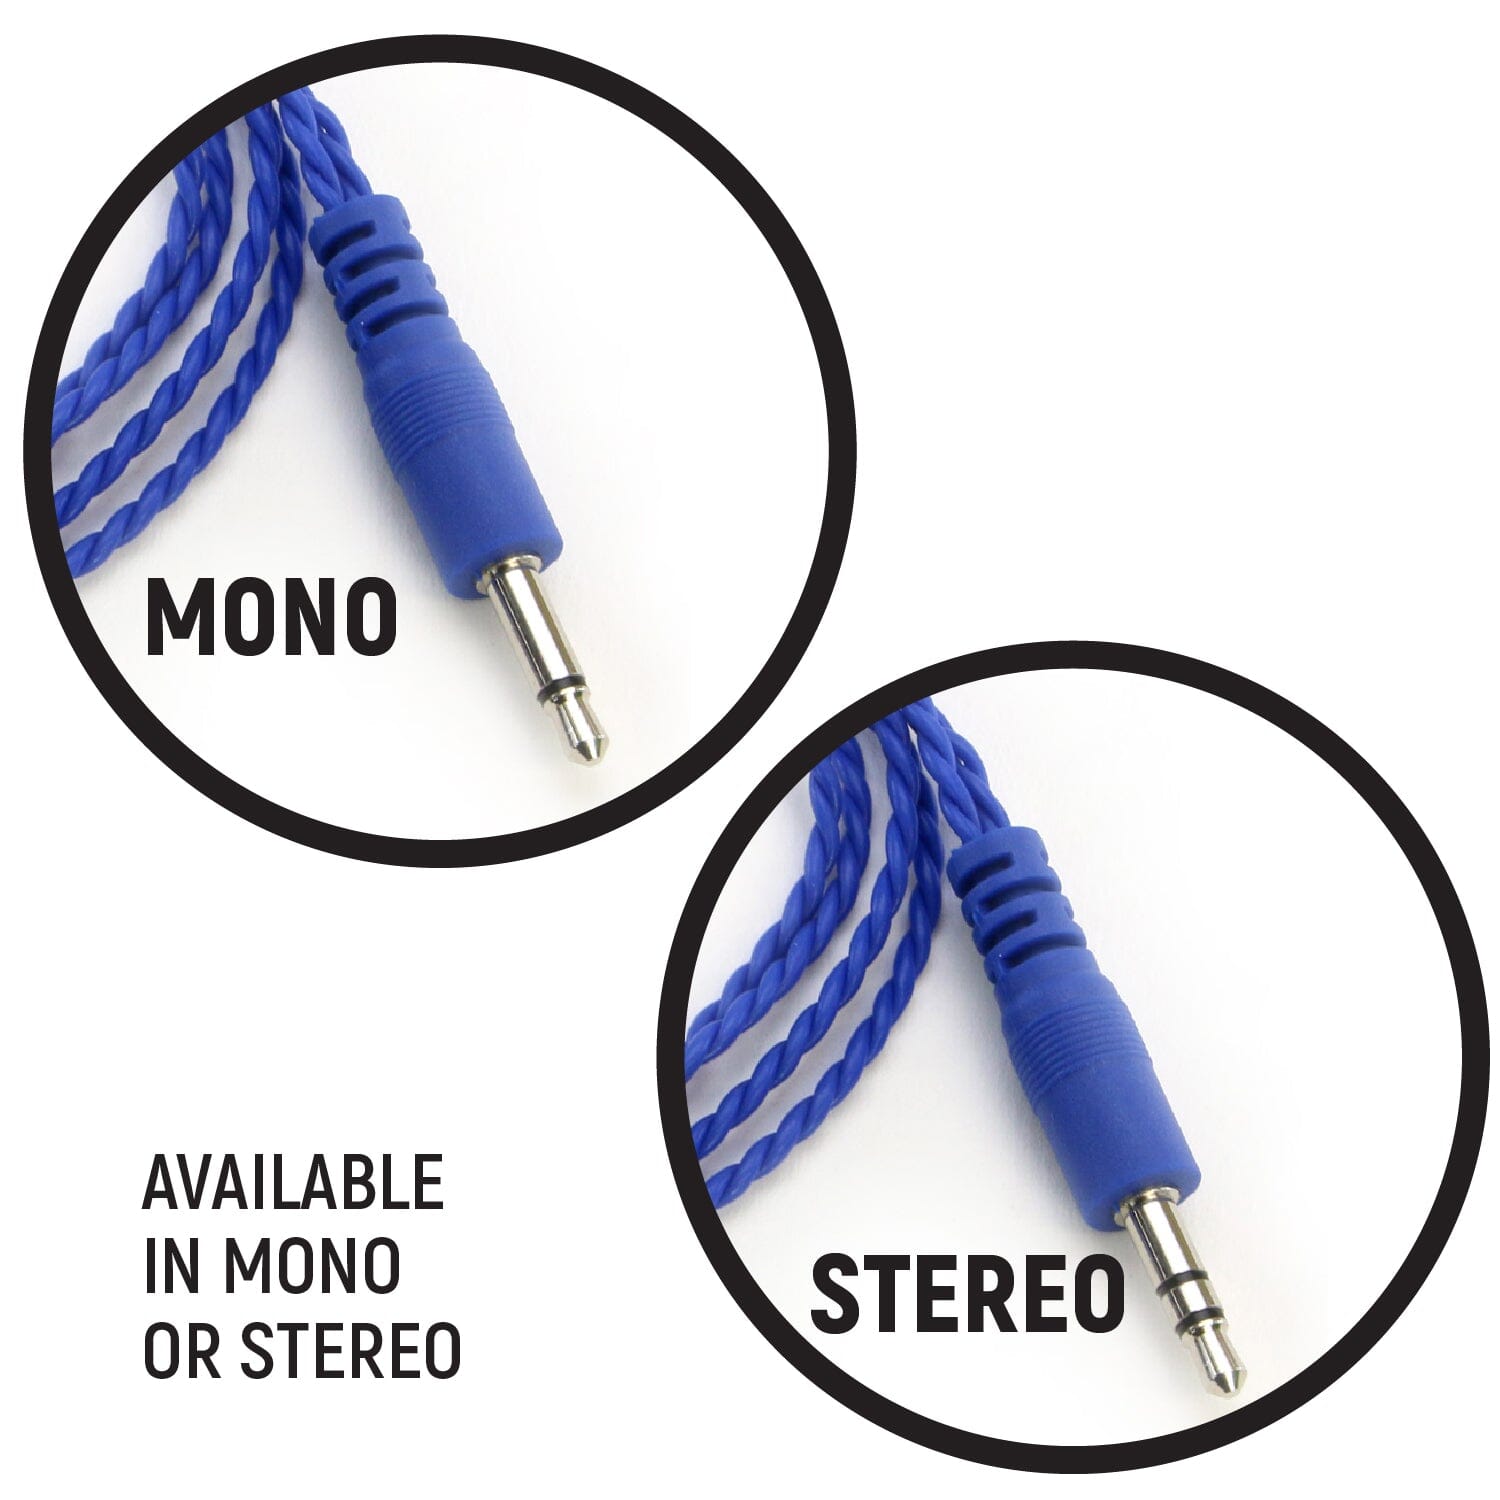 AlphaBud Foam Earbud Speakers - Mono and Stereo